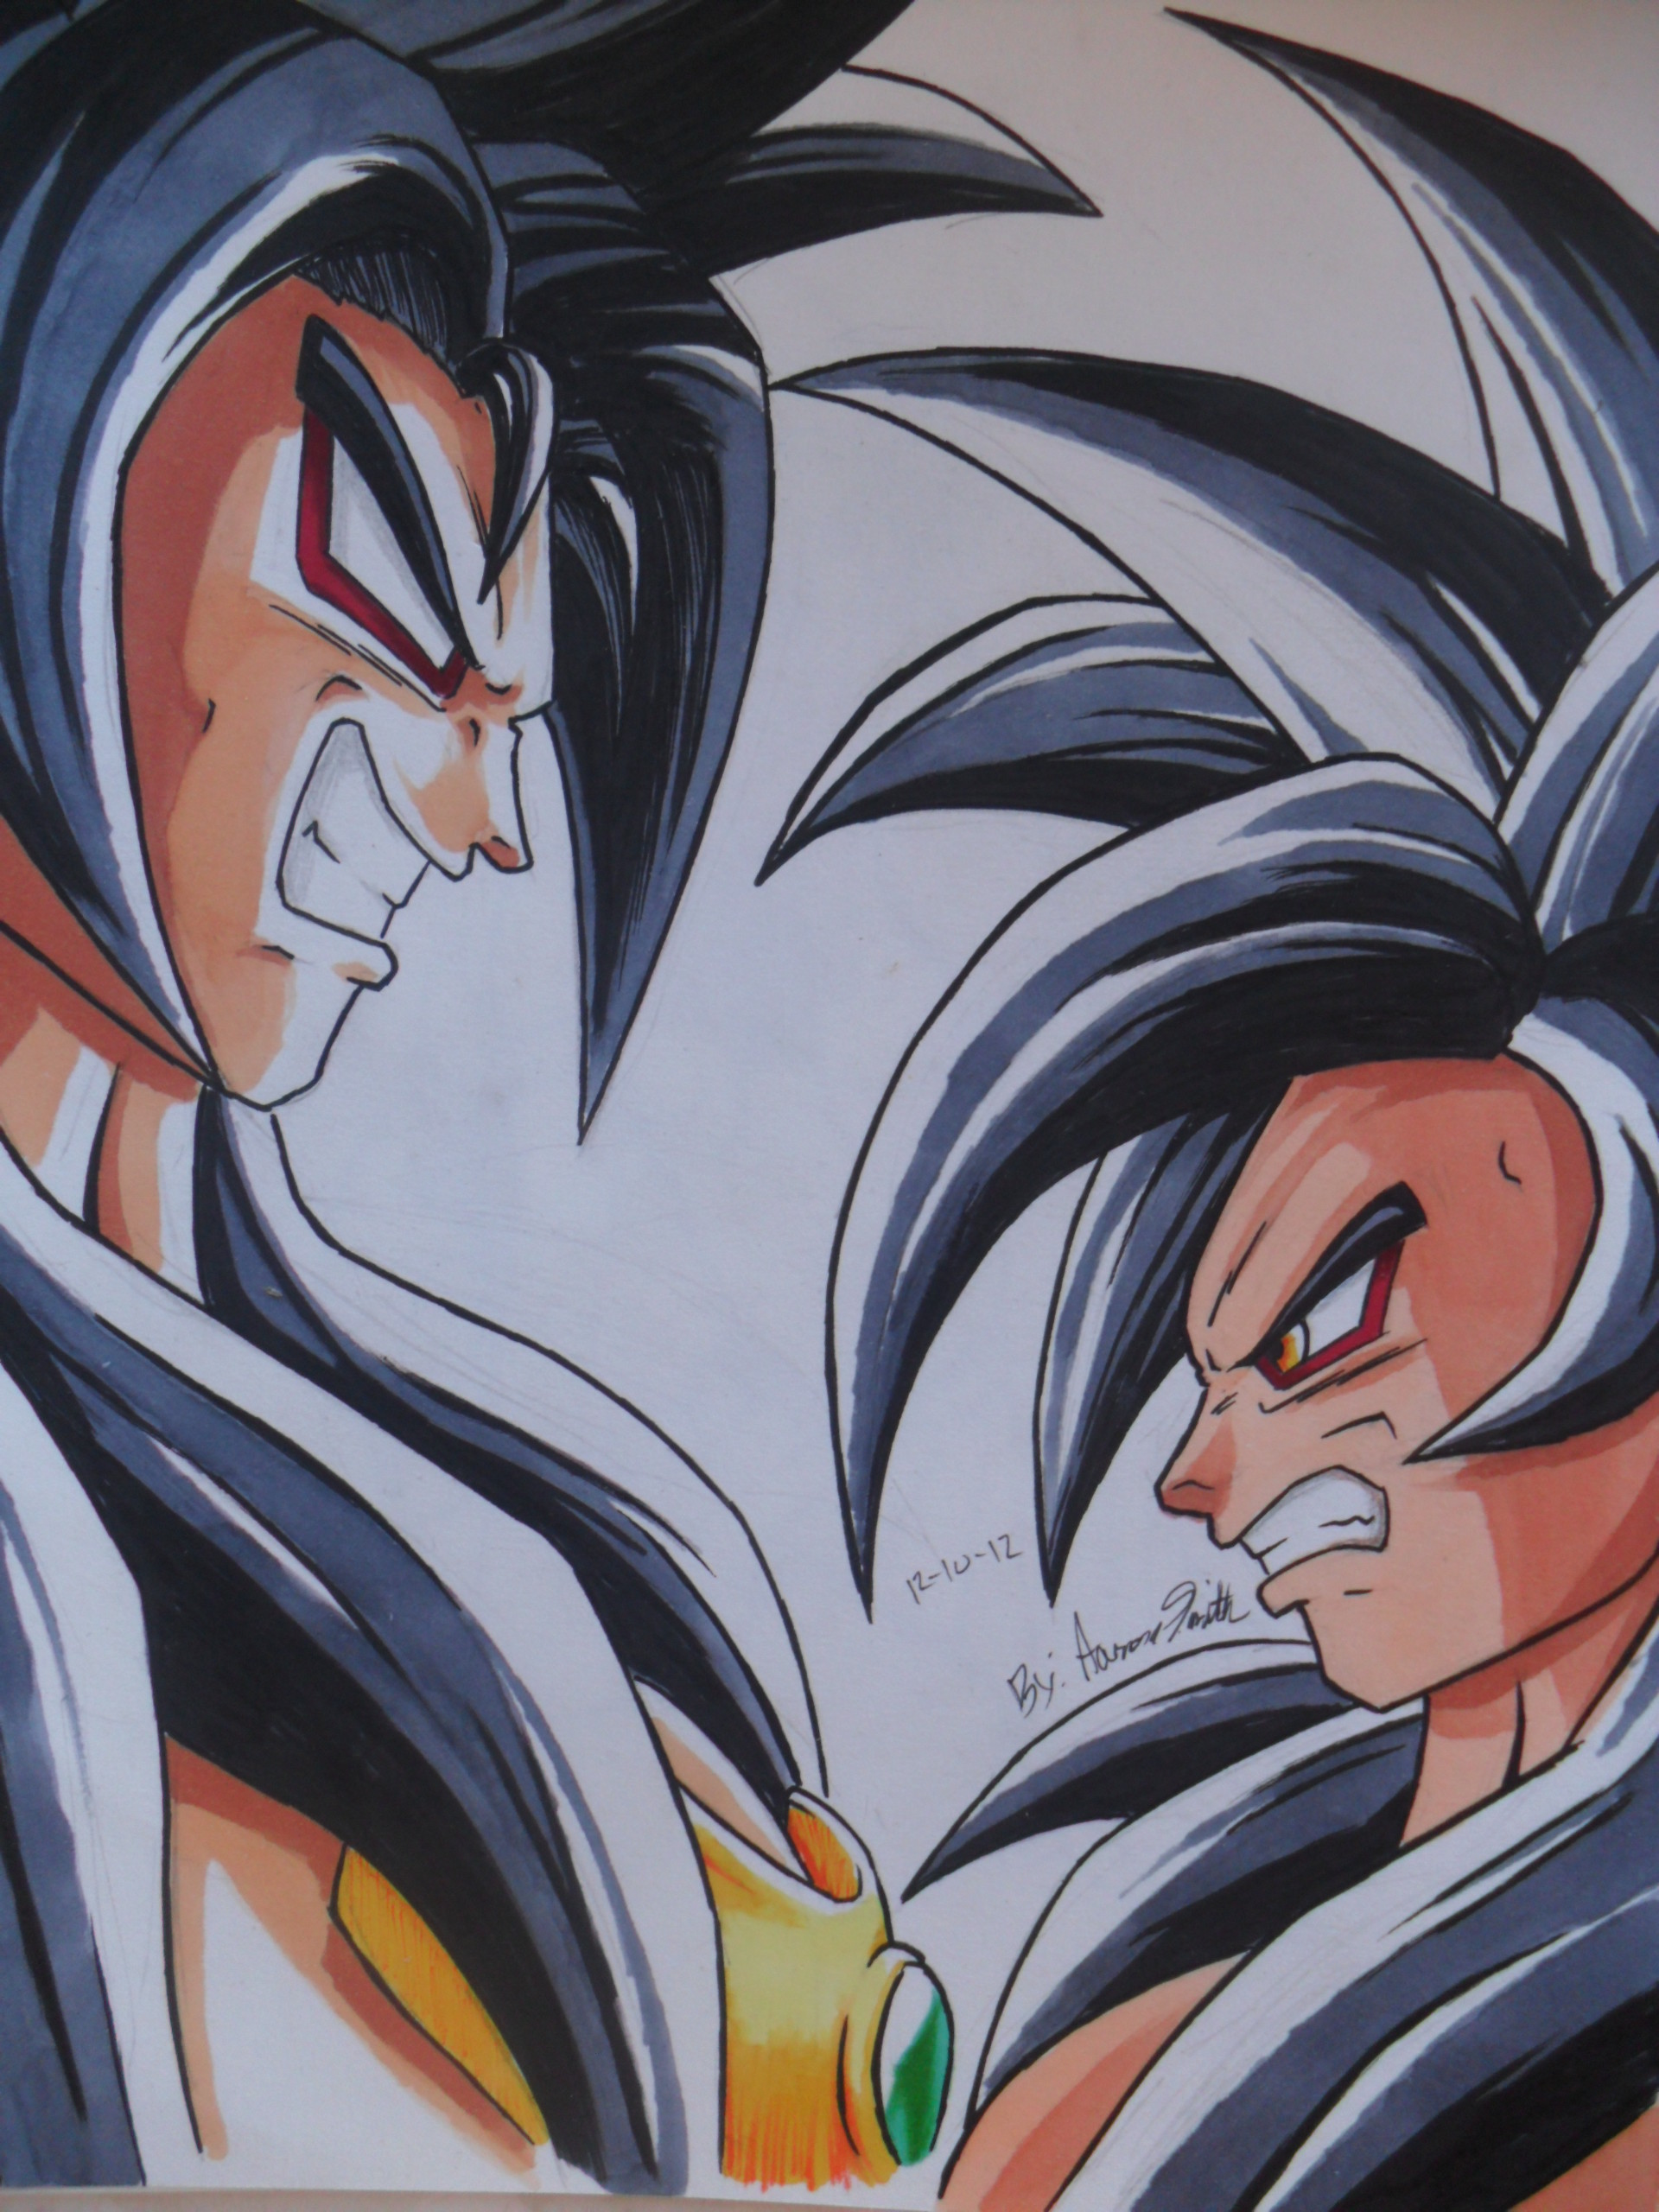 Goku vs Broly Wallpaper (61+ images)